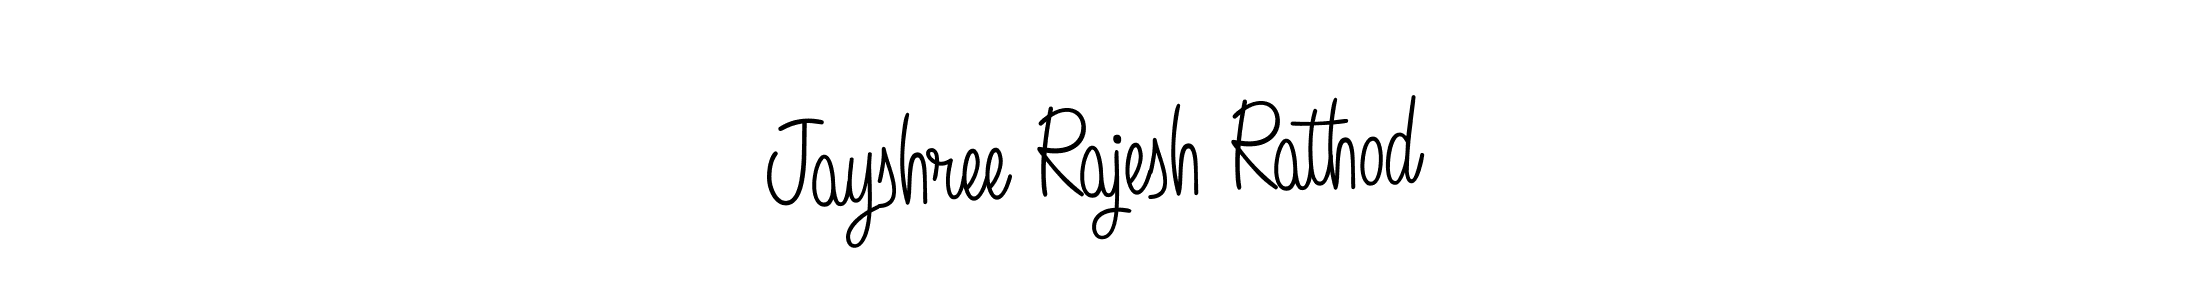 Best and Professional Signature Style for Jayshree Rajesh Rathod. Angelique-Rose-font-FFP Best Signature Style Collection. Jayshree Rajesh Rathod signature style 5 images and pictures png